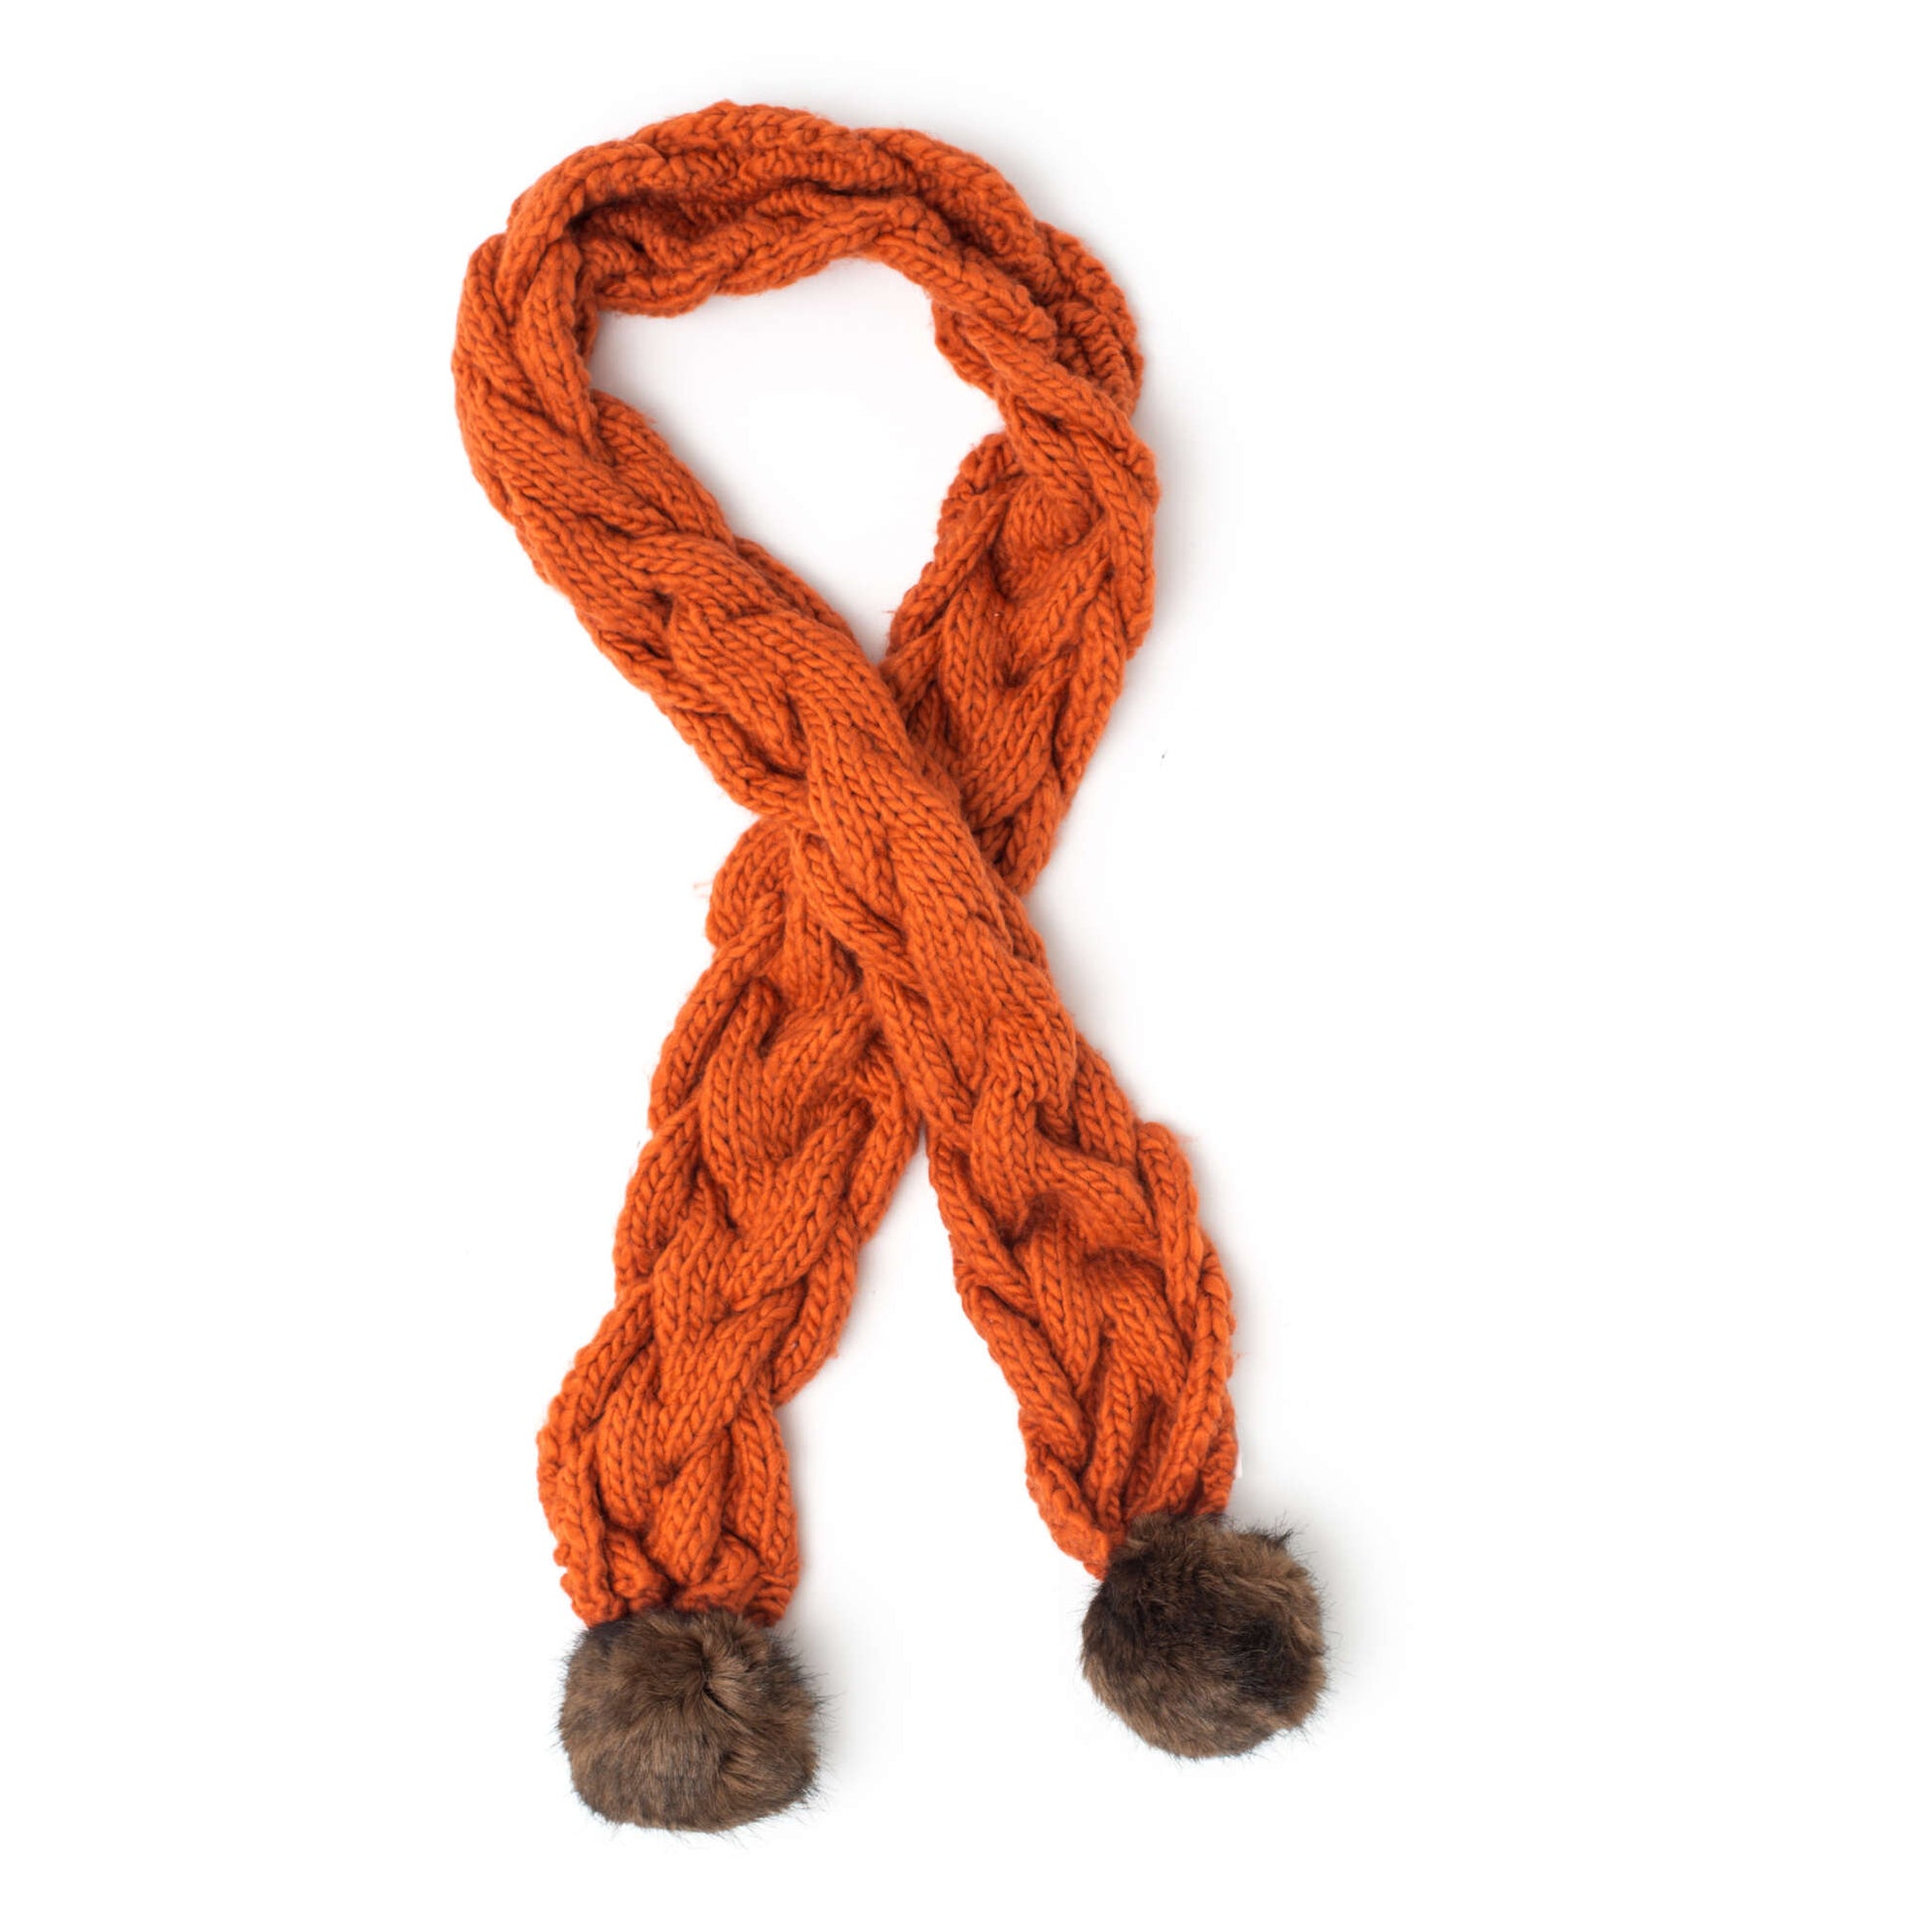 Bernat Snowdrift Cable Scarf Knit Scarf made in Bernat Roving yarn